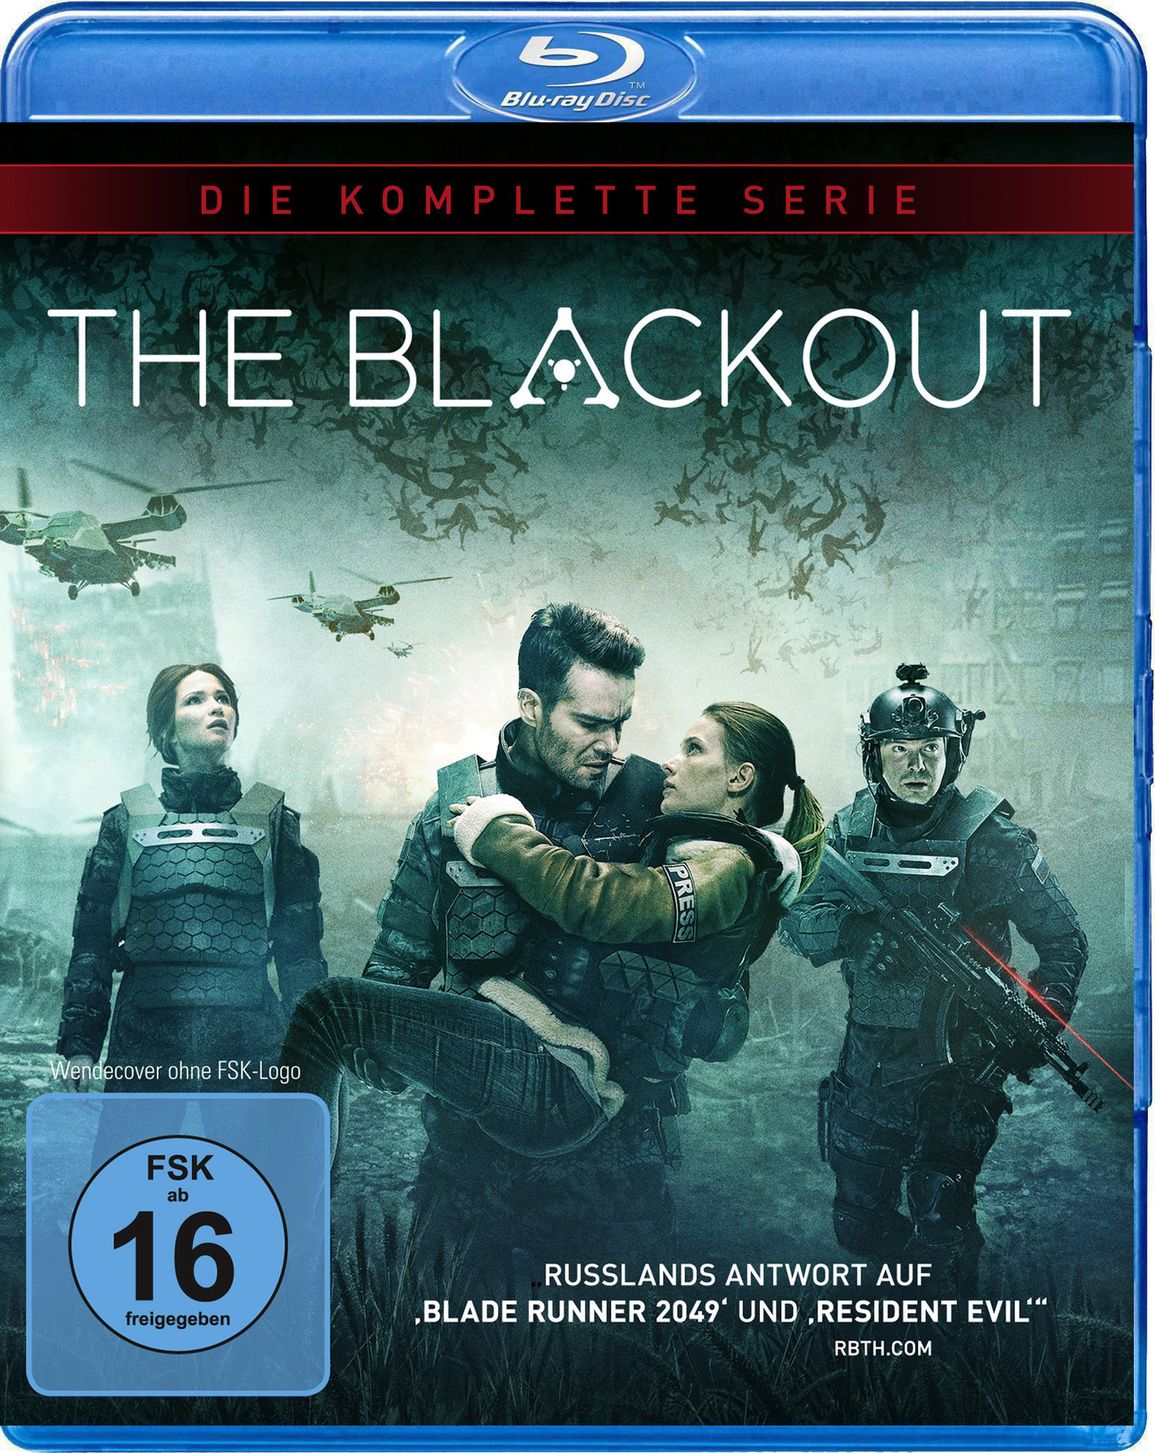 The Blackout (Komplette Serie) (Blu-ray) – jpc